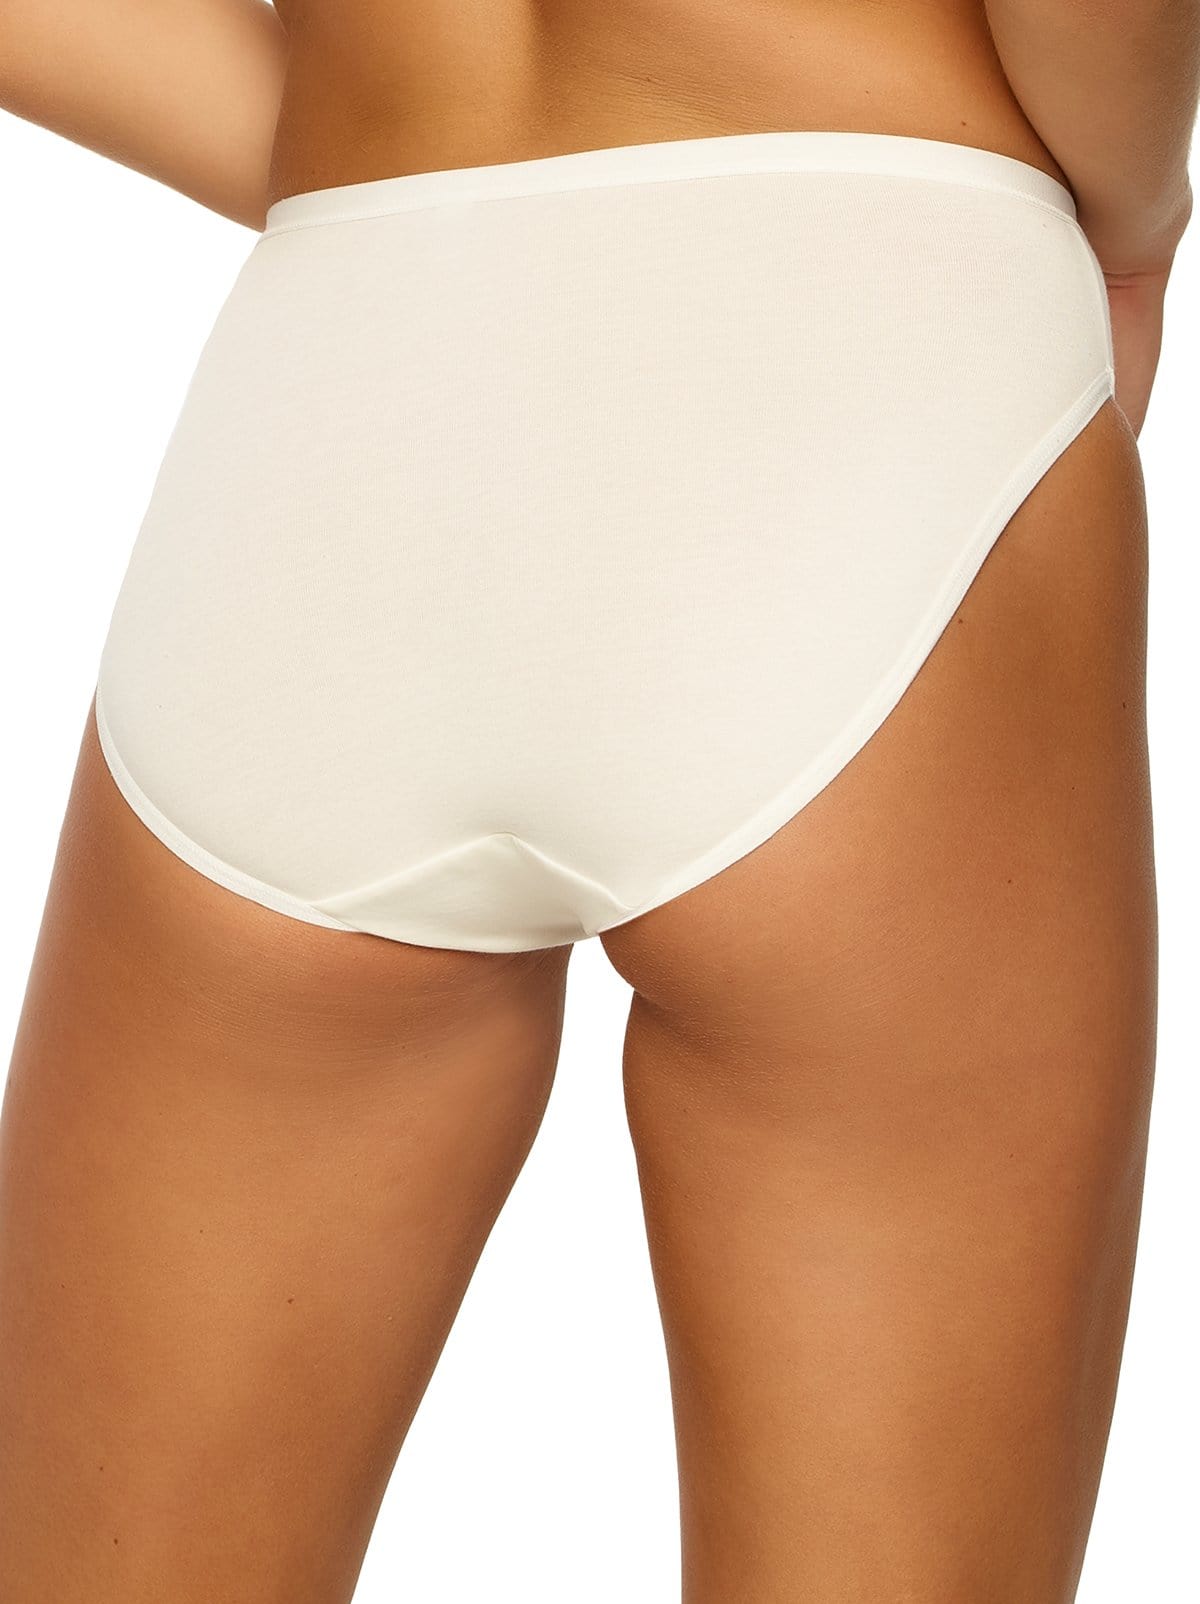 Felina Cotton Modal Hi Cut Panties - Sexy Lingerie Panties for Women -  Underwear for Women 8-Pack (Cloudy Sky, Small)